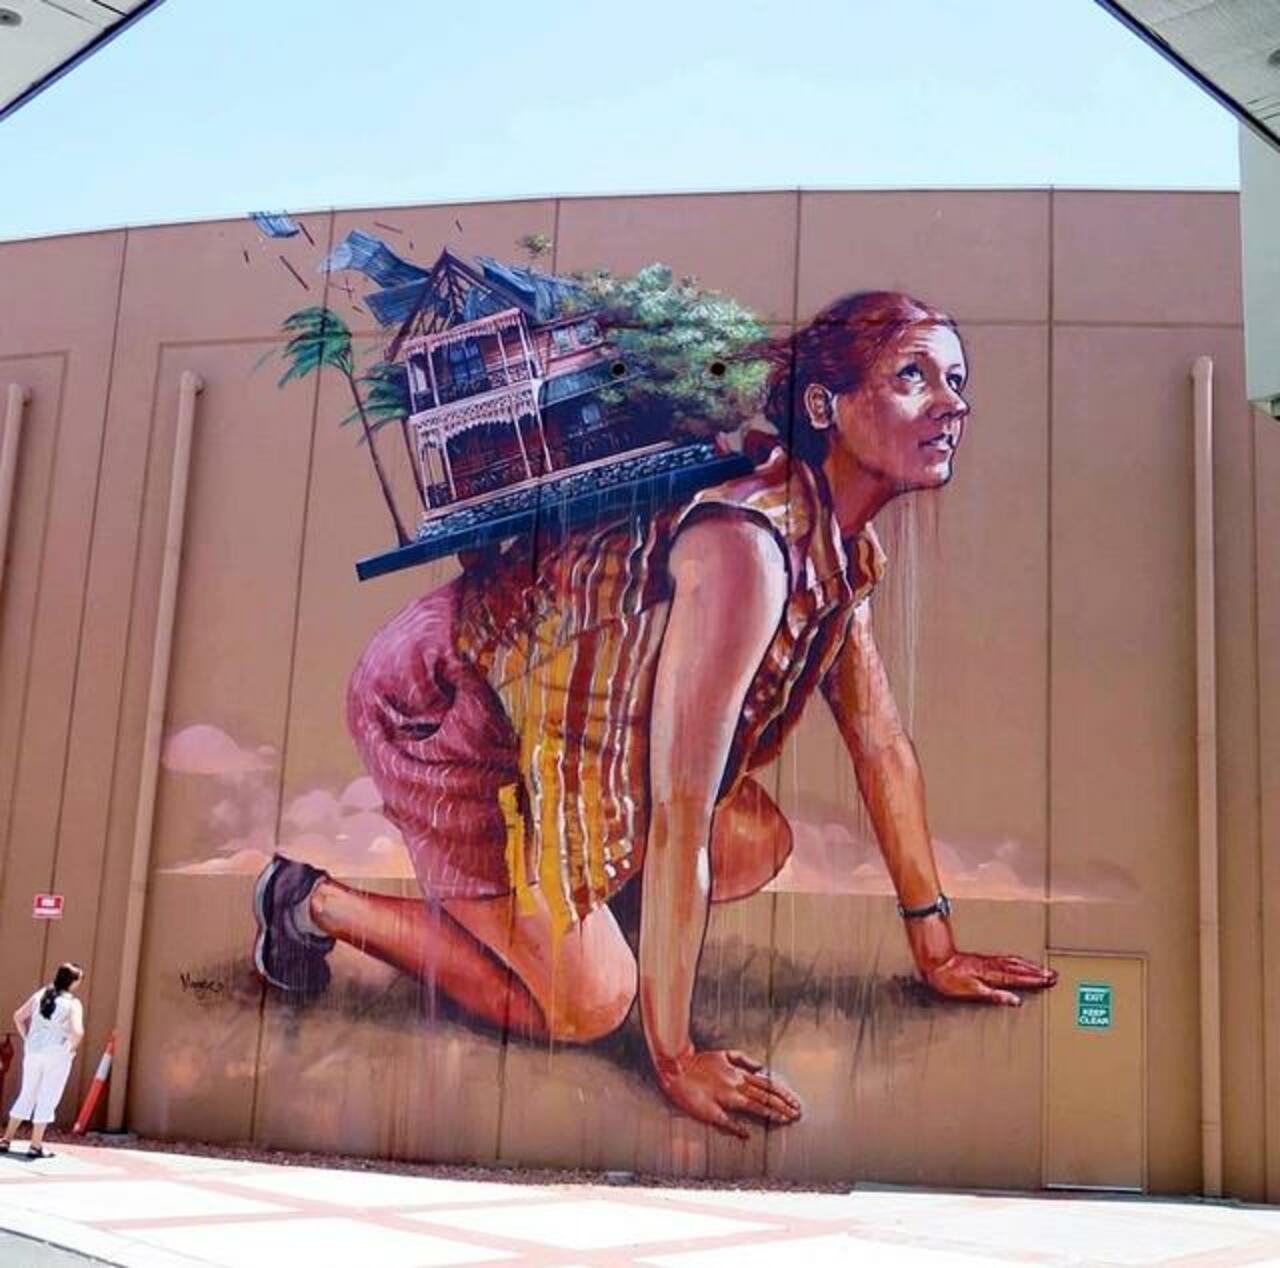 Latest Fintan Magee massive Street Art piece in Bunbury, Western Australia 

#art #graffiti #mural #streetart http://t.co/zjG8MzsMd9